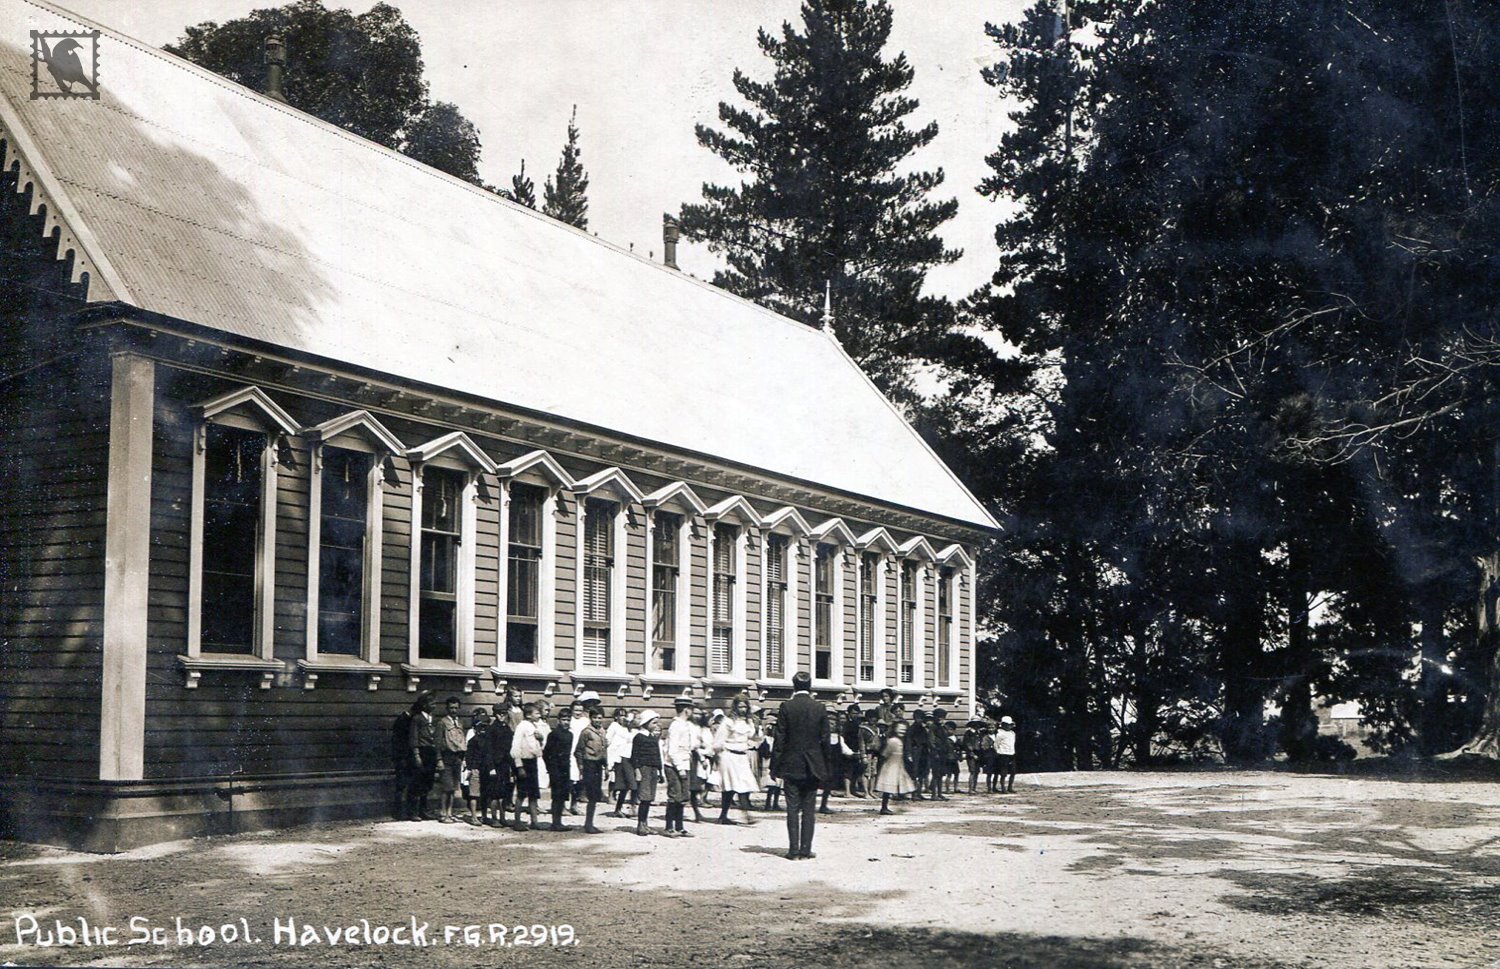 Public School Havelock